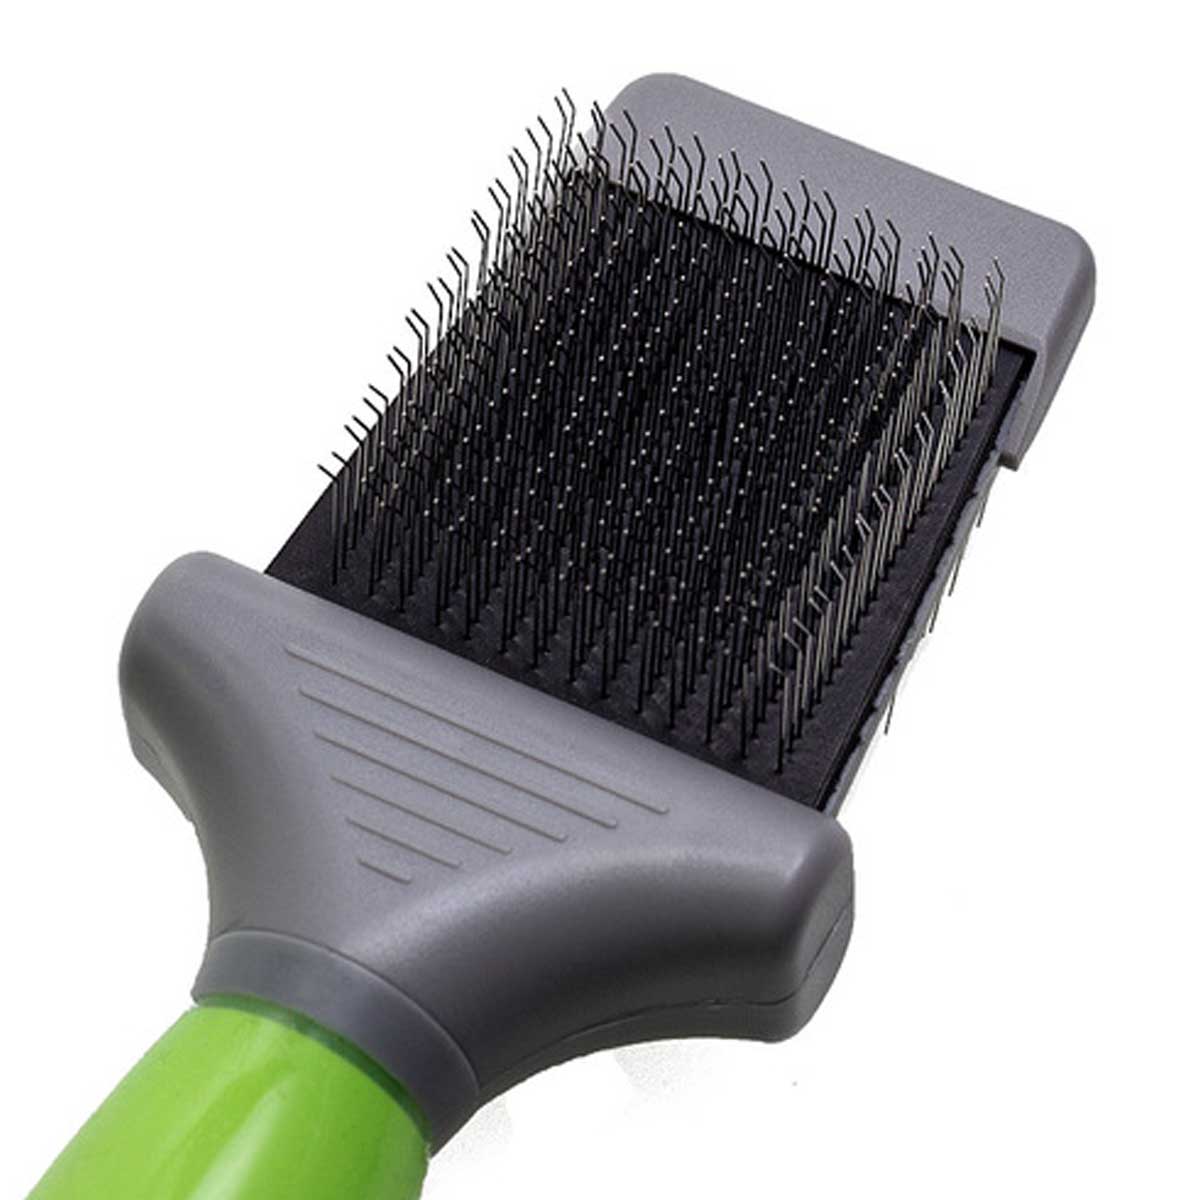 Moser slicker brush premium with gel handle